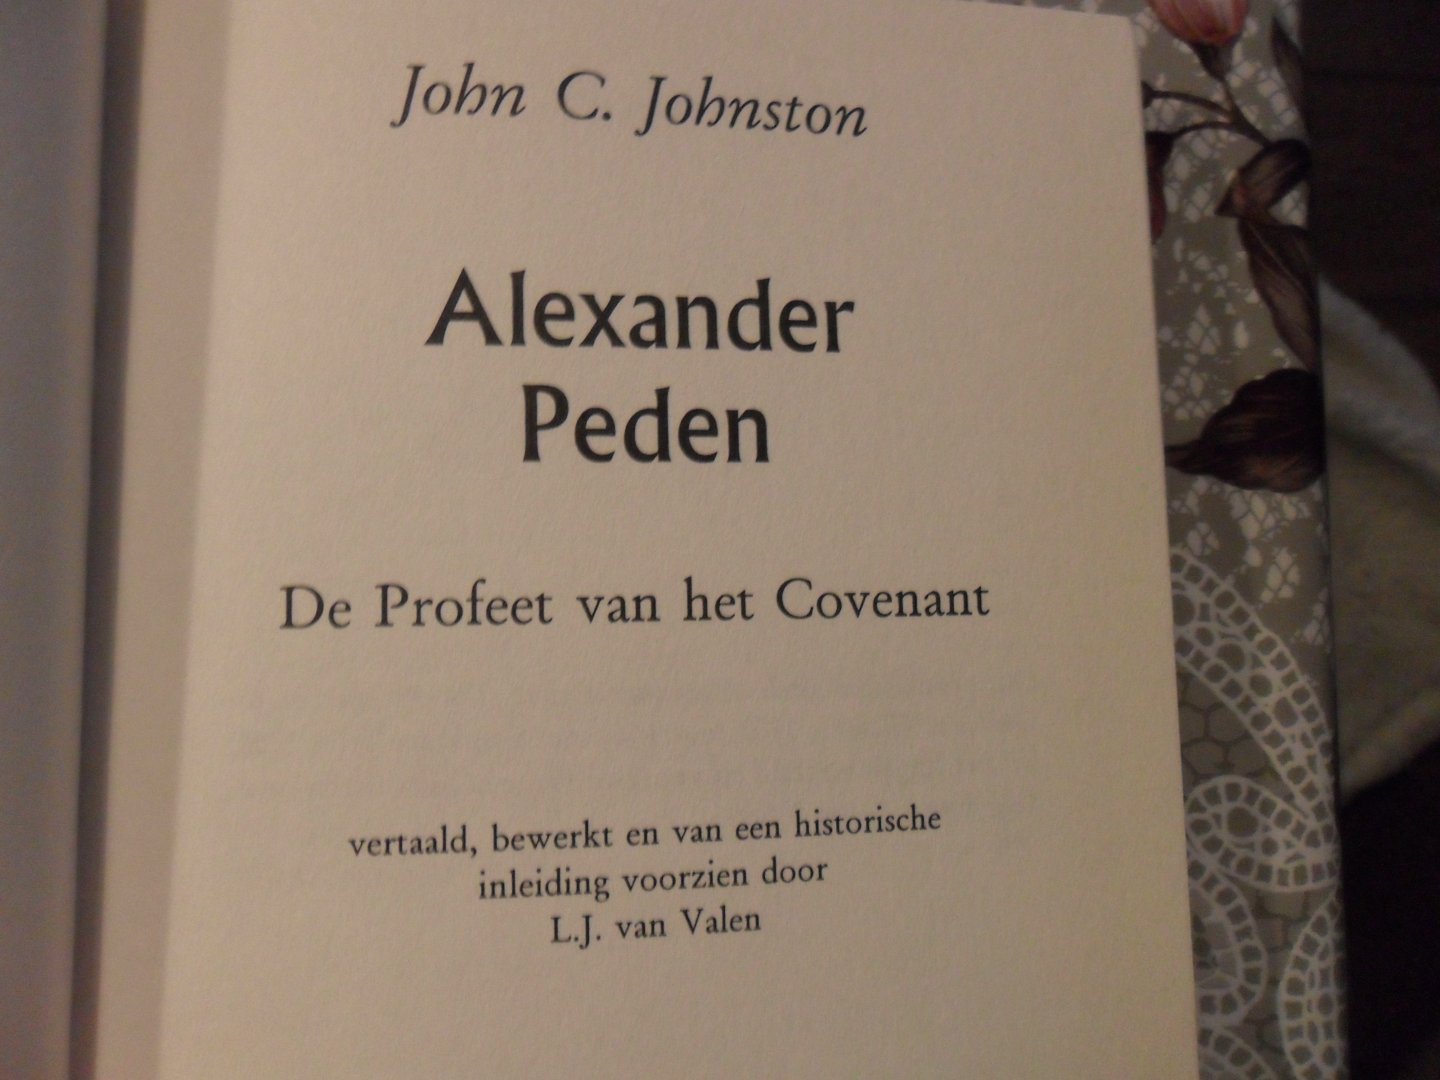 Johnston C. John - Alexander Peden